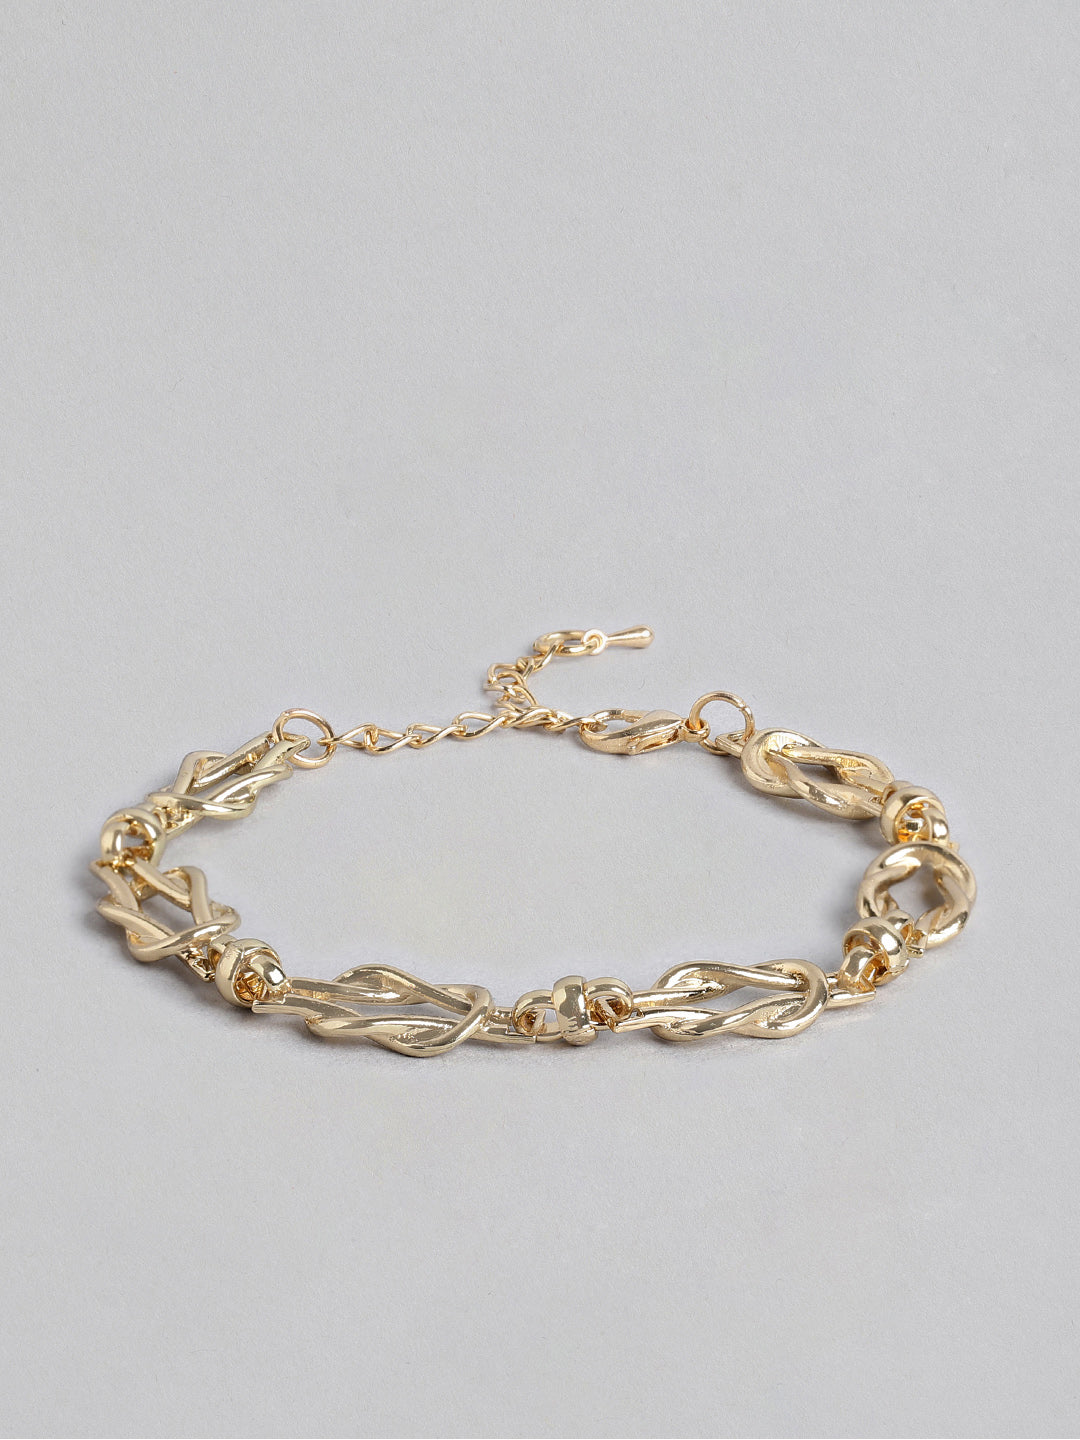 Buy Large Gold Bracelet, Wide Cuff Bracelet, Avant Garde Jewelry, Artisan  Jewelry, Unique Bracelet, Statement Bracelet, Chunky Bracelet Online in  India - Etsy